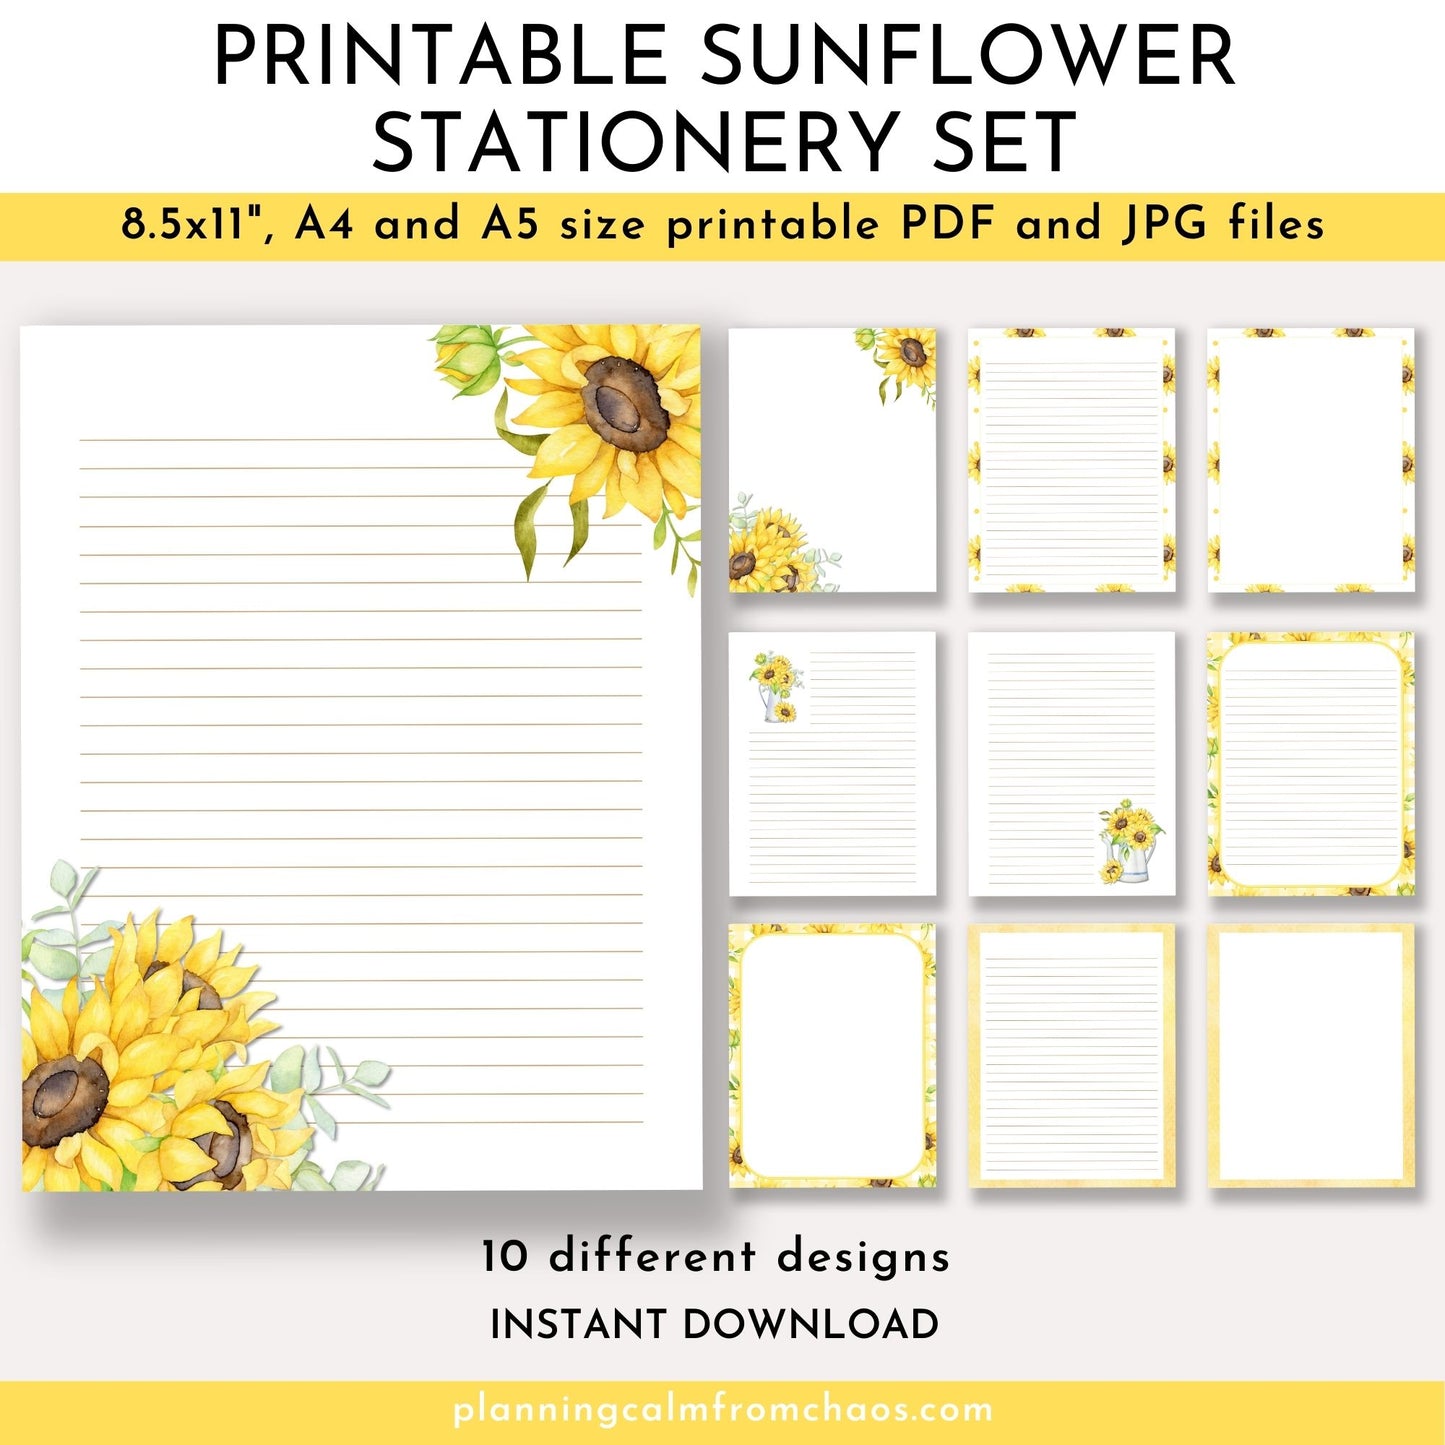 printable sunflower stationery set